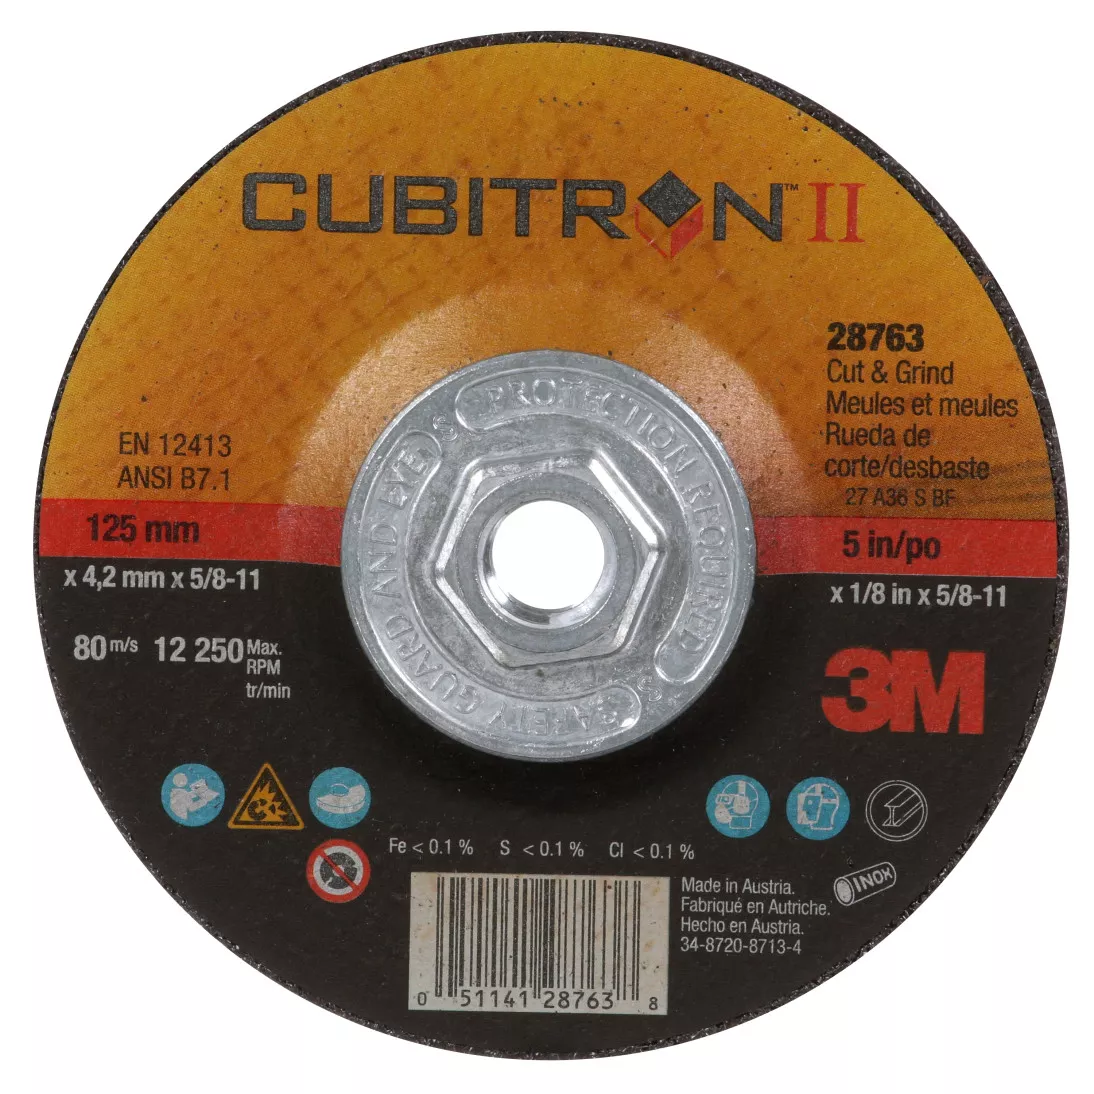 3M™ Cubitron™ II Cut and Grind Wheel, 28763, Type 27 Quick Change, 5 in x 1/8 in x 5/8 in-11, 10/Inner, 20 ea/Case